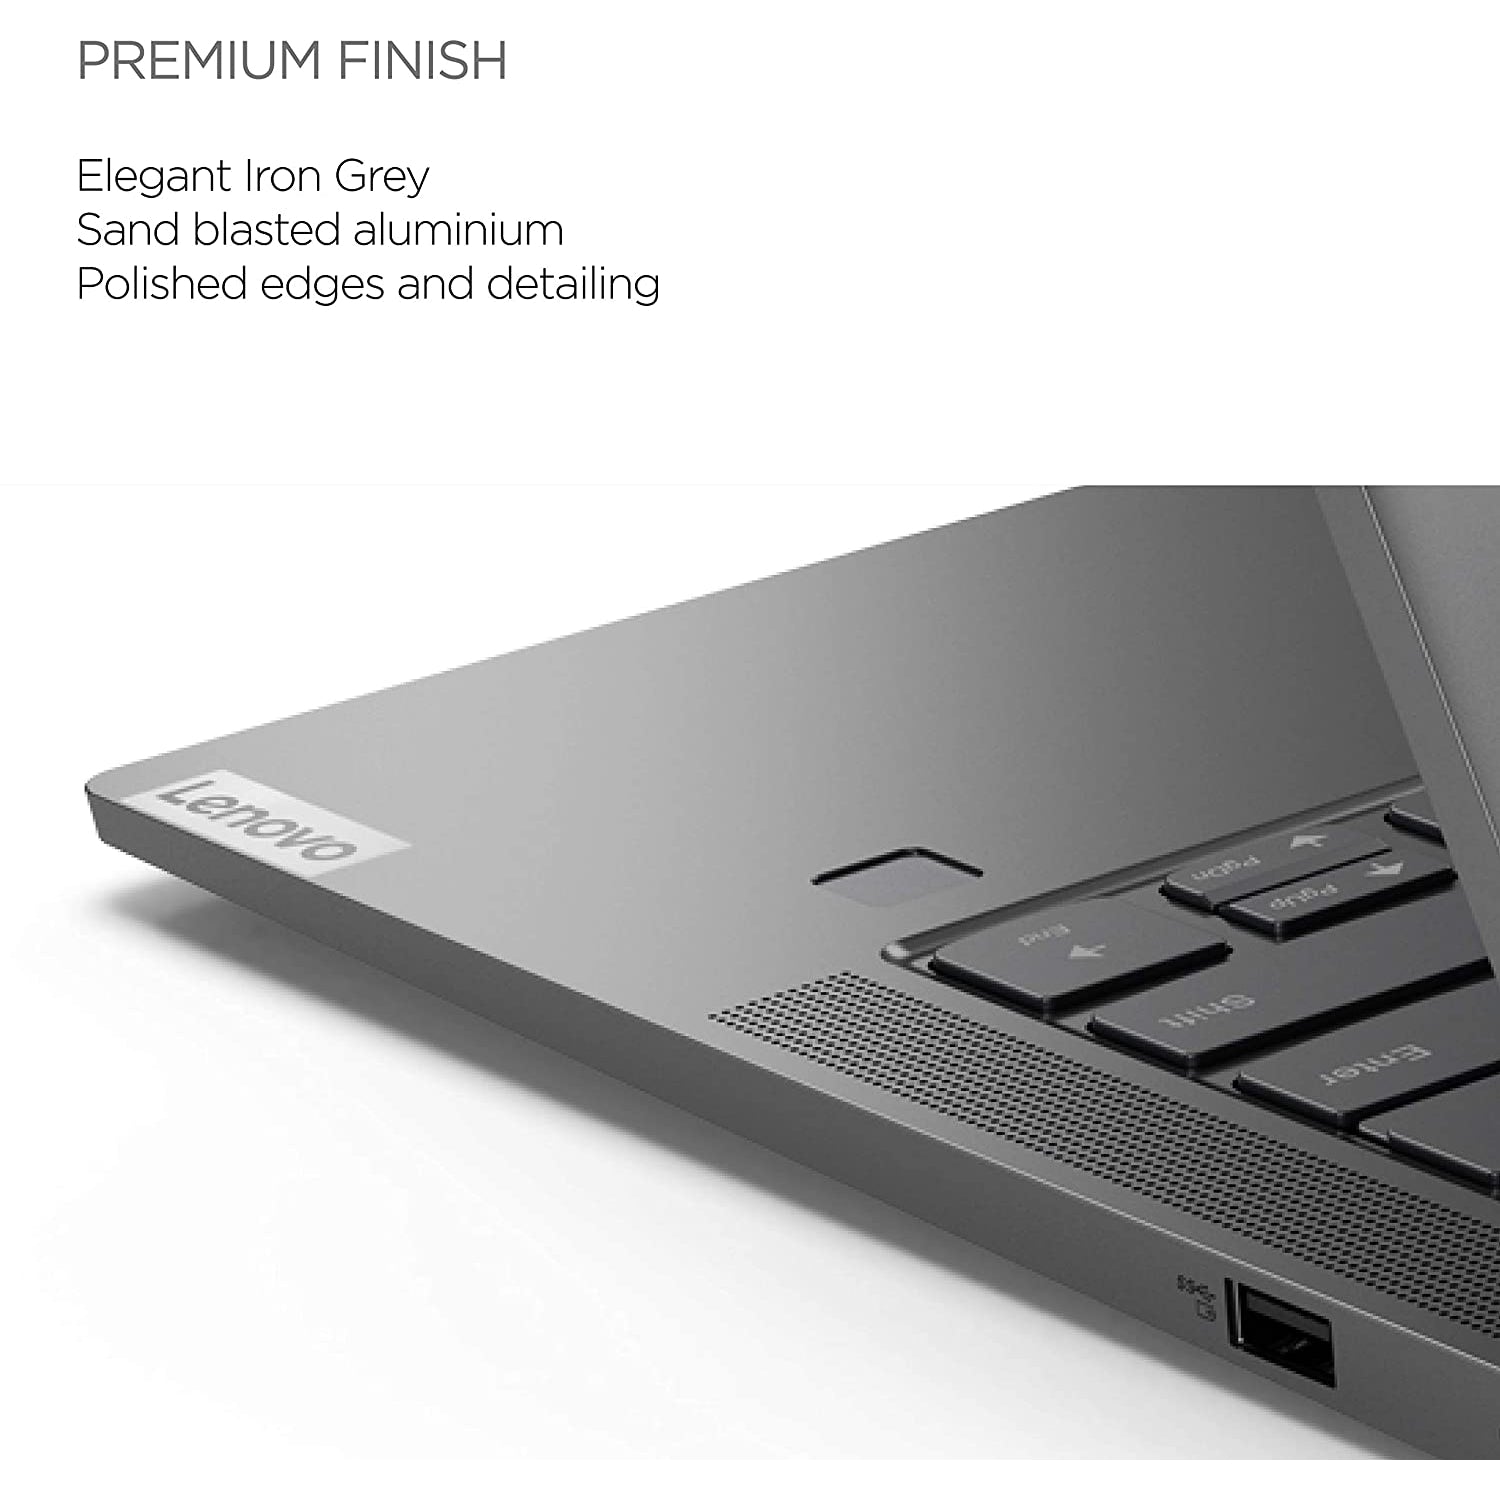 Lenovo Yoga C740 14" FHD Convertible Laptop (Intel Core i7, 8GB RAM, 512GB SSD, Windows 10) - Iron Grey